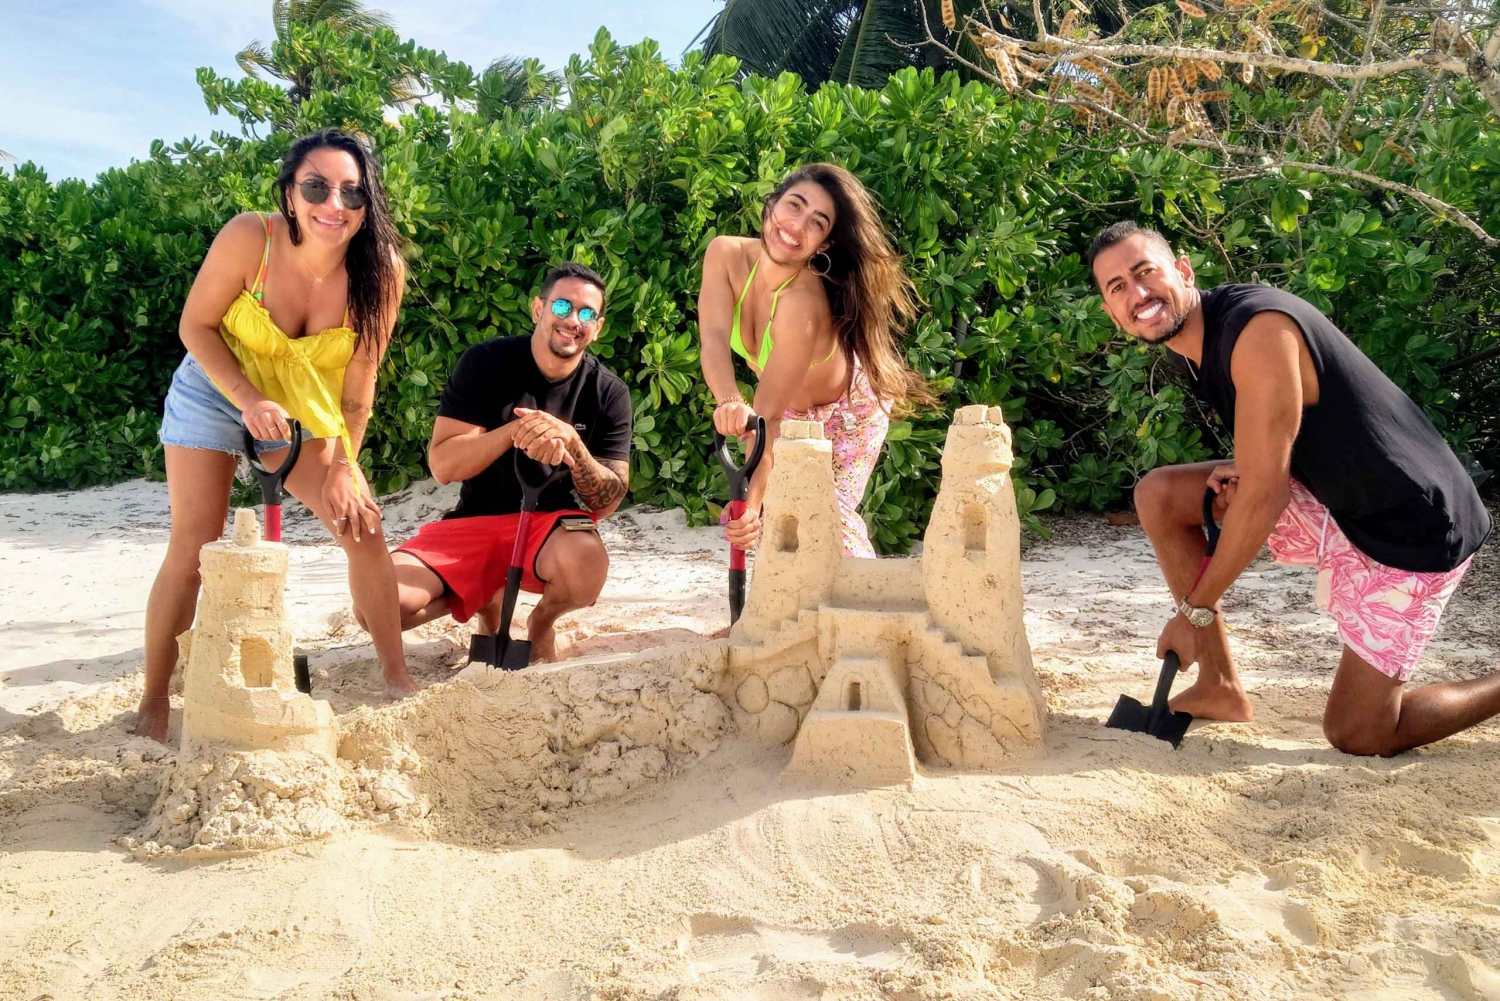 Nassau Bahamas: Sandburgen bauen am Strand